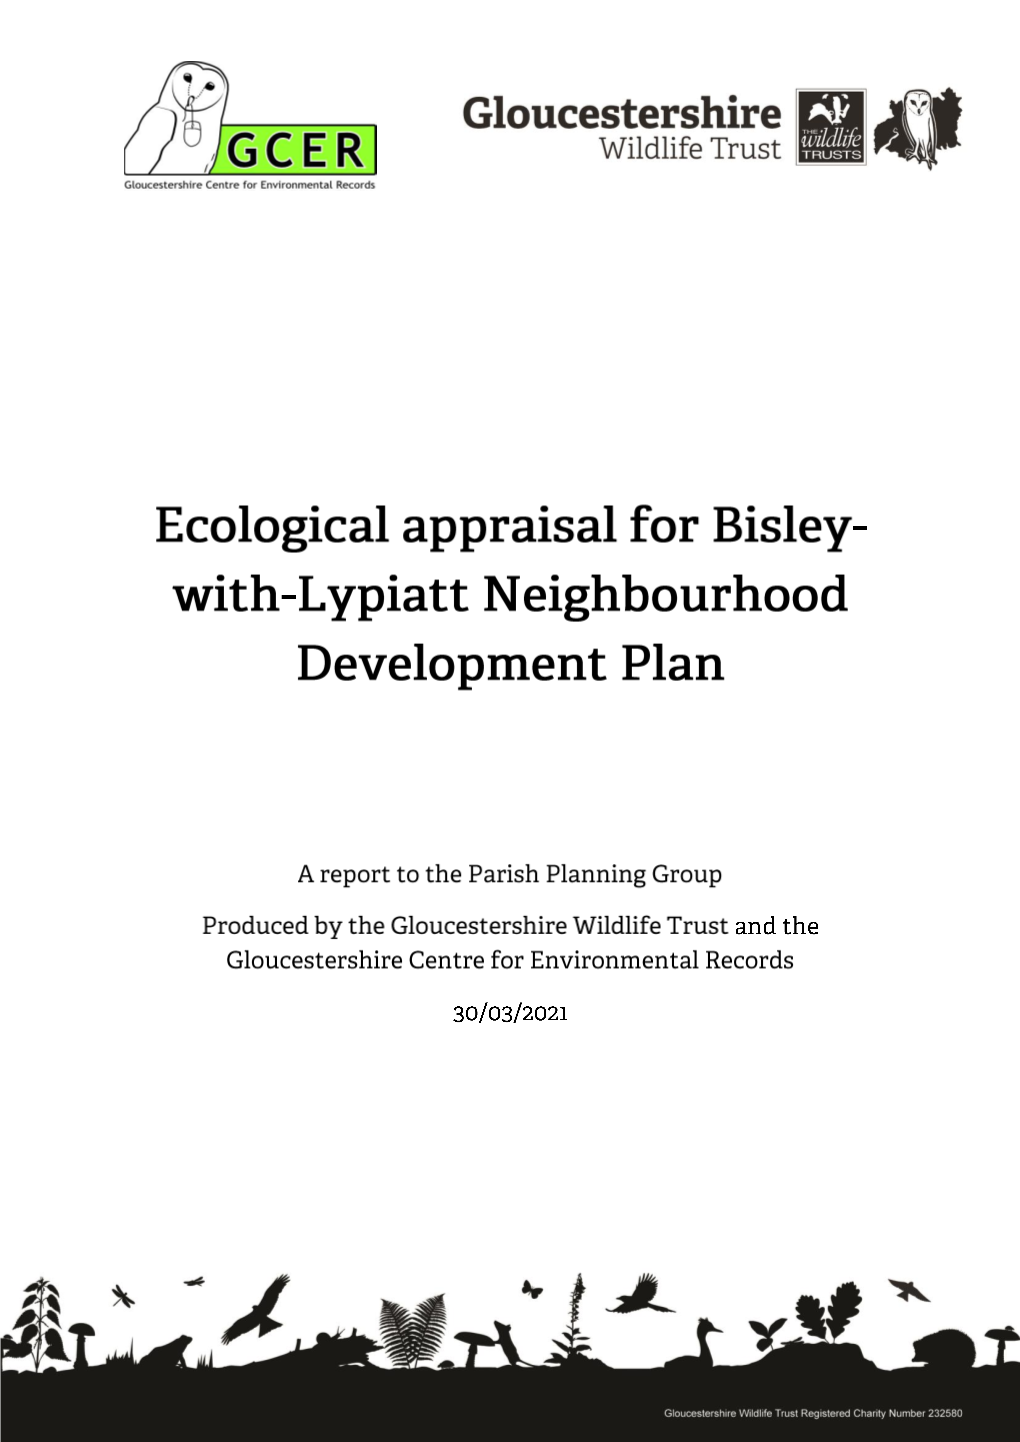 GWT Bisley with Lypiatt NDP Wildlife Appraisal FINAL